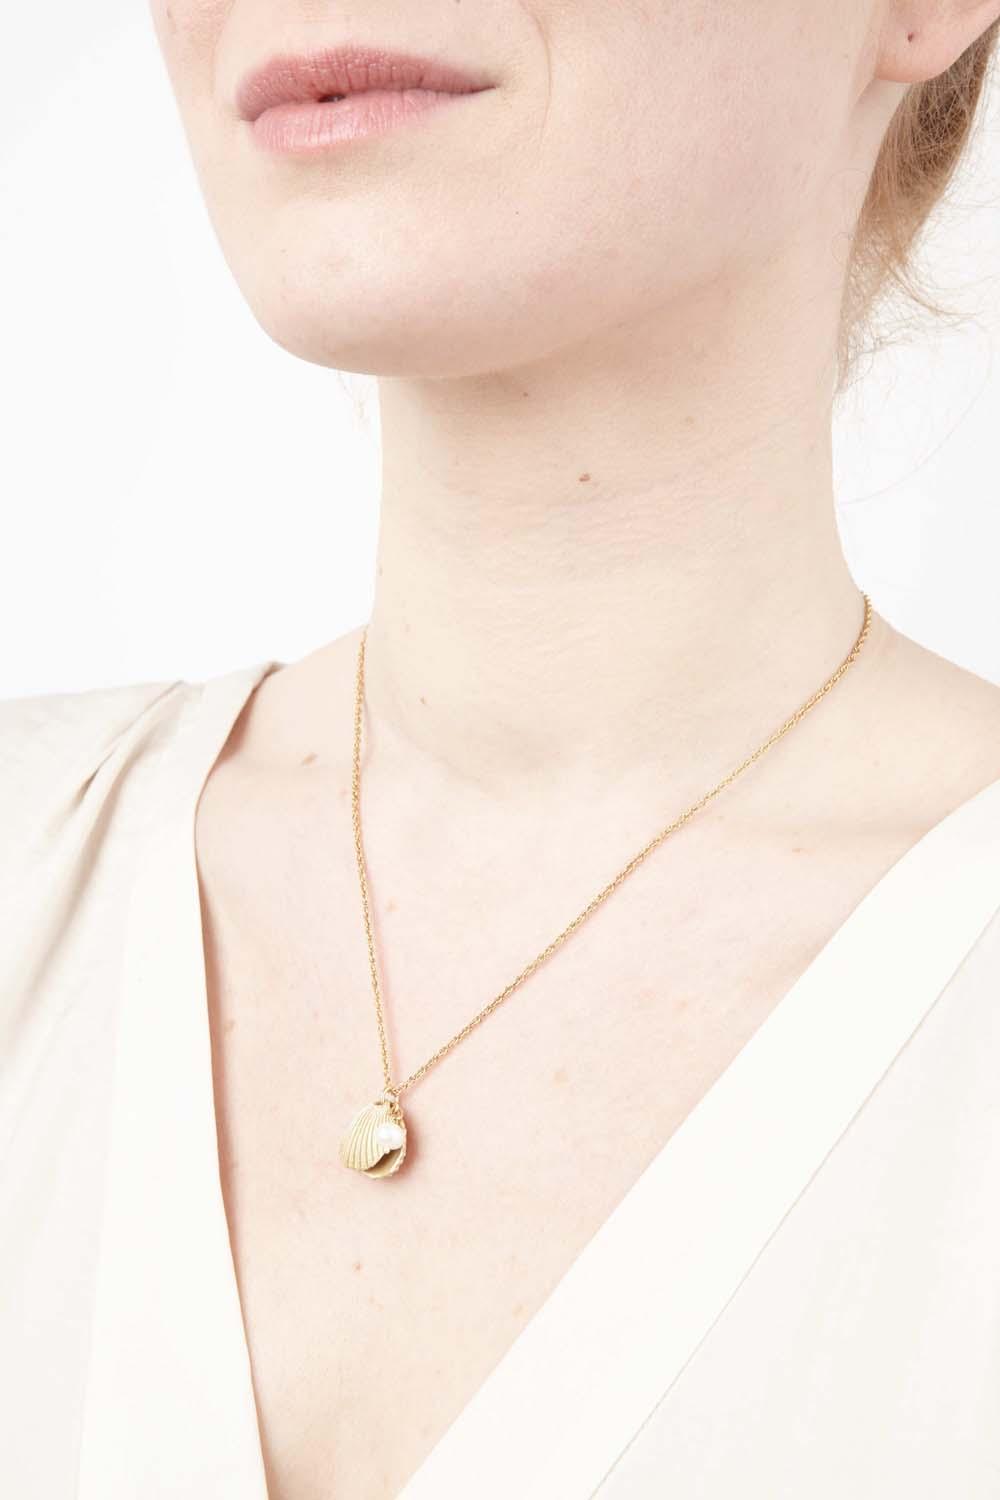 Oyster Shell Pendant - Michael Michaud Jewellery